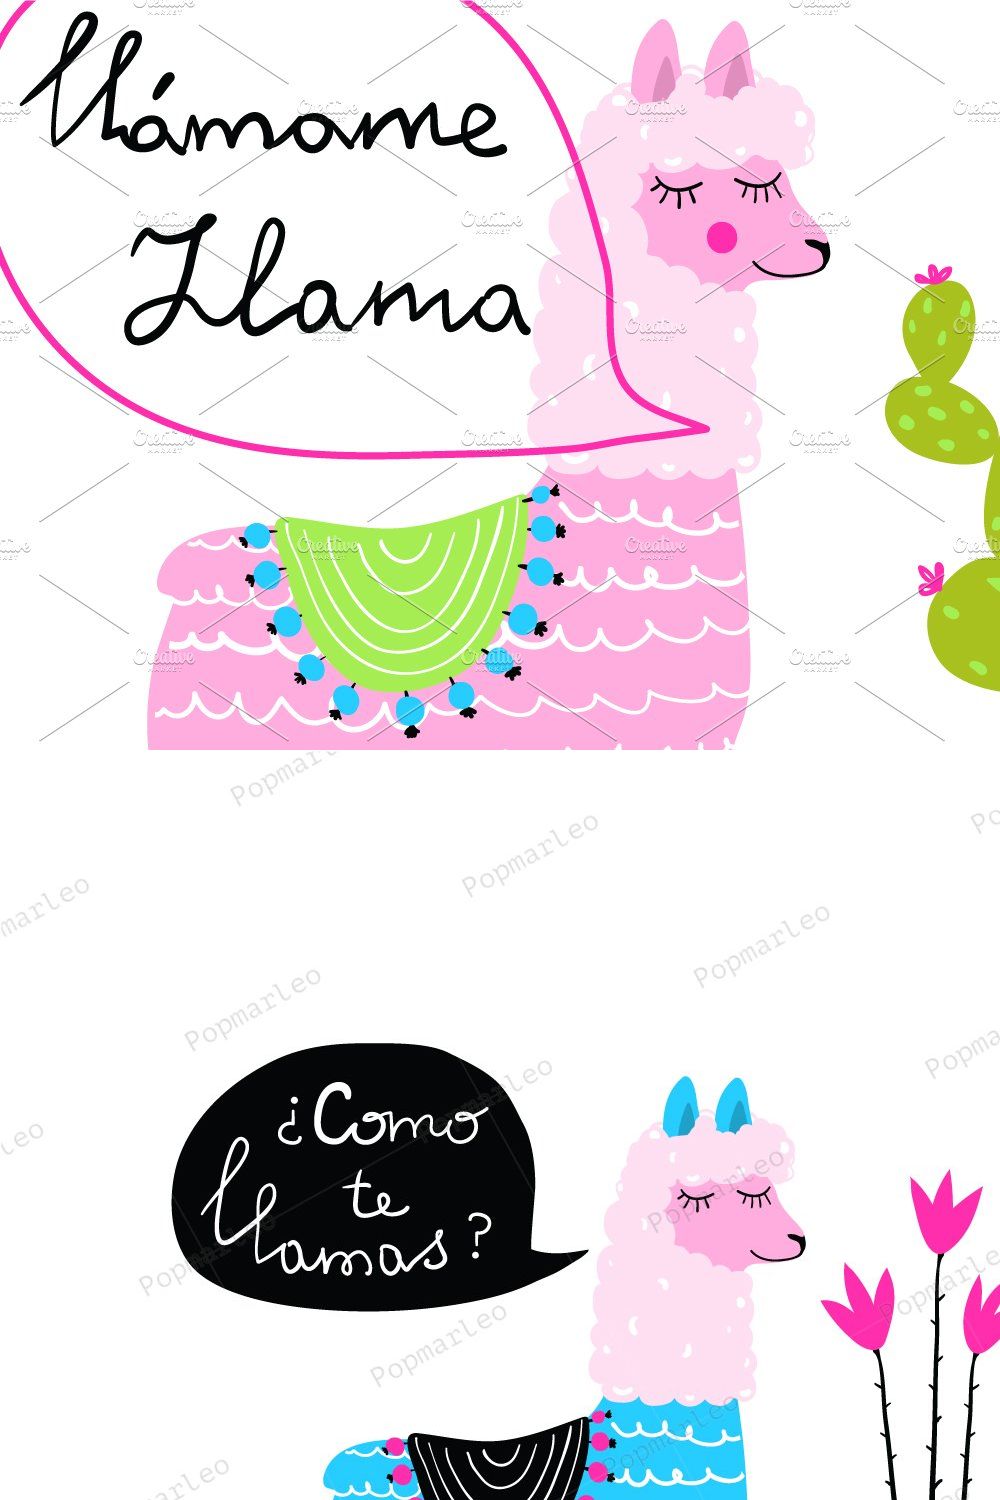 Fun Llama and Cacti Me LLamo Llama pinterest preview image.